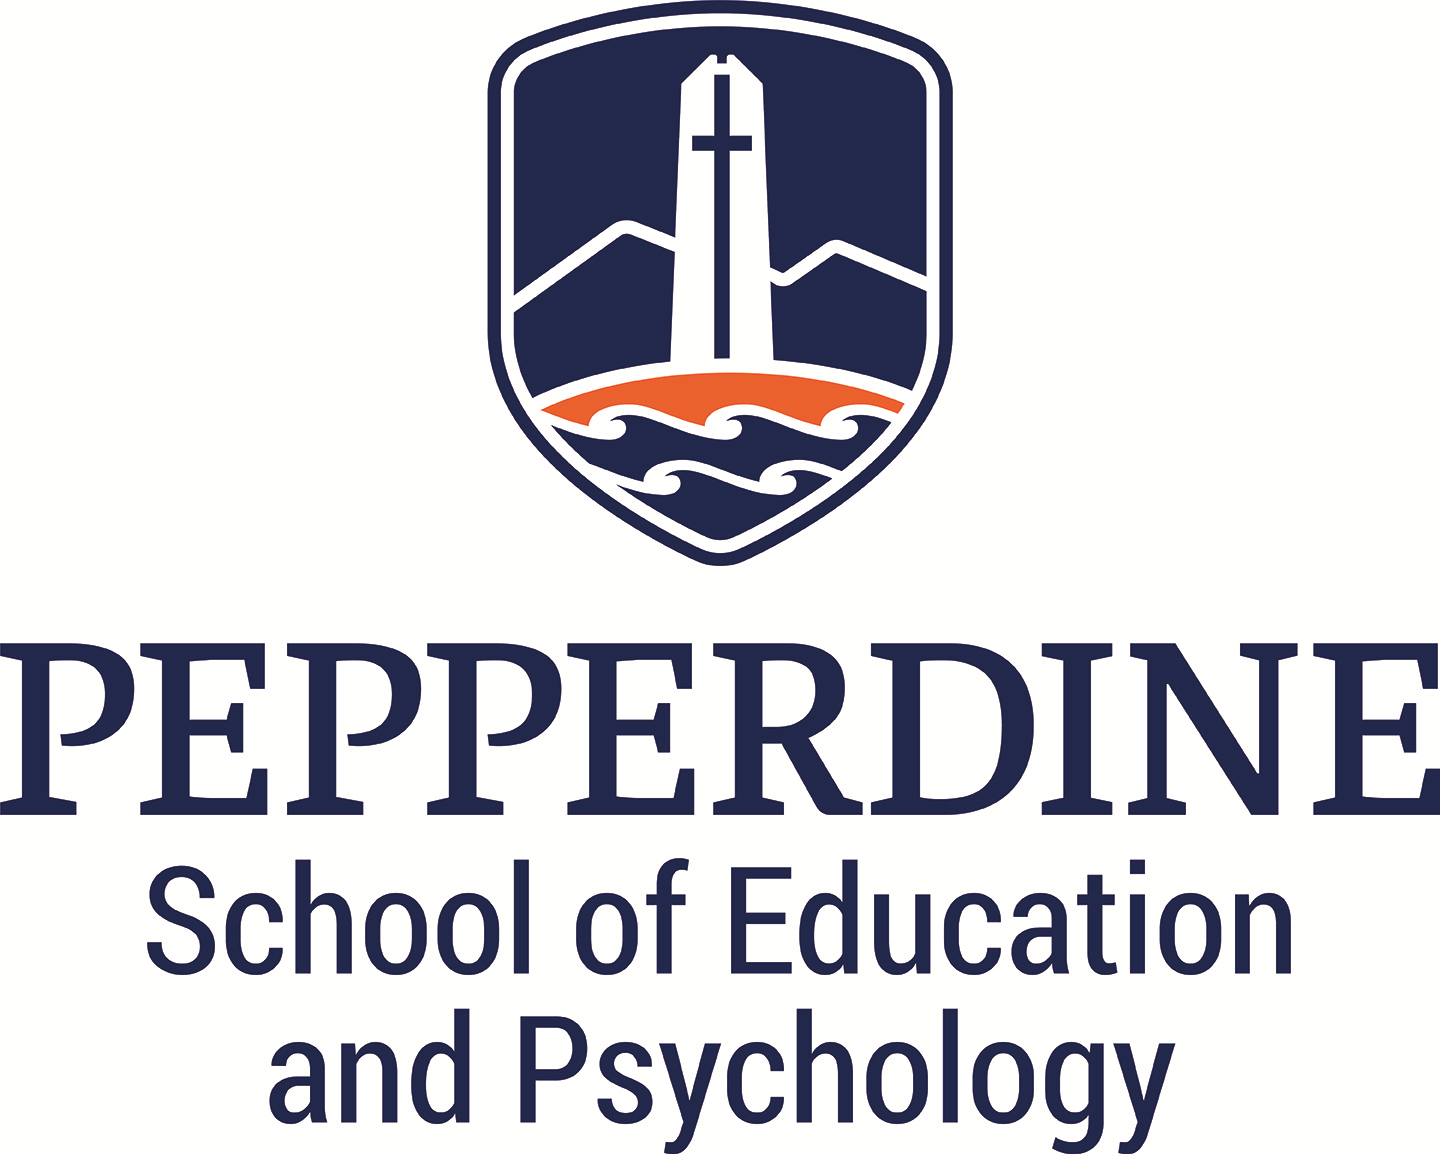 Master of Arts in Psychology Program at Pepperdine University